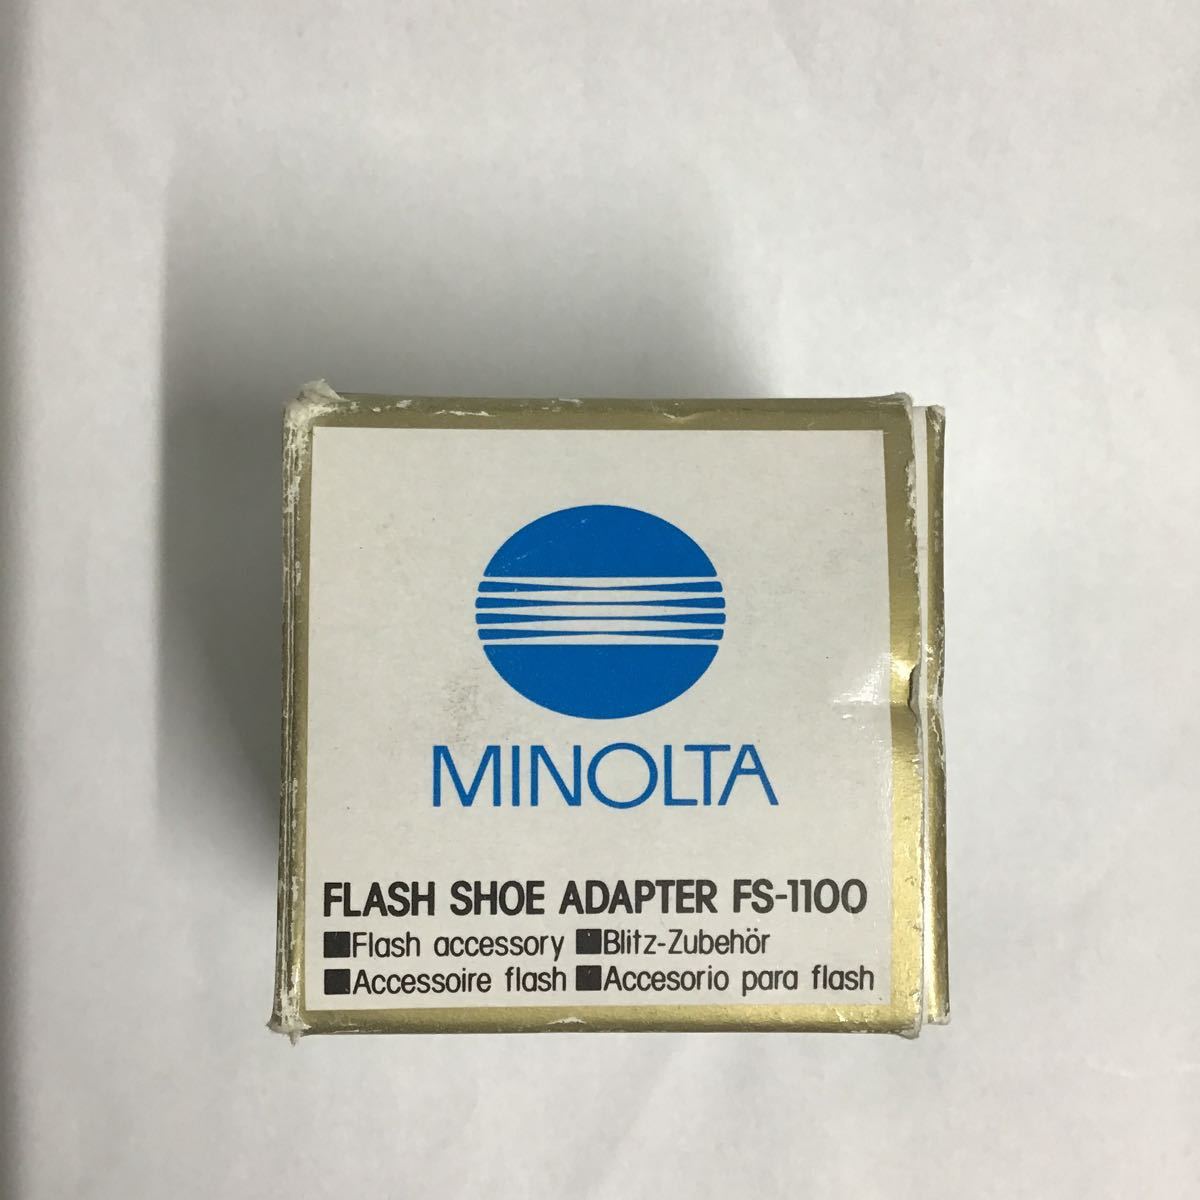 MINOLTA Minolta flash shoe adaptor FS-1100 FLASH SHOE ADAPTER